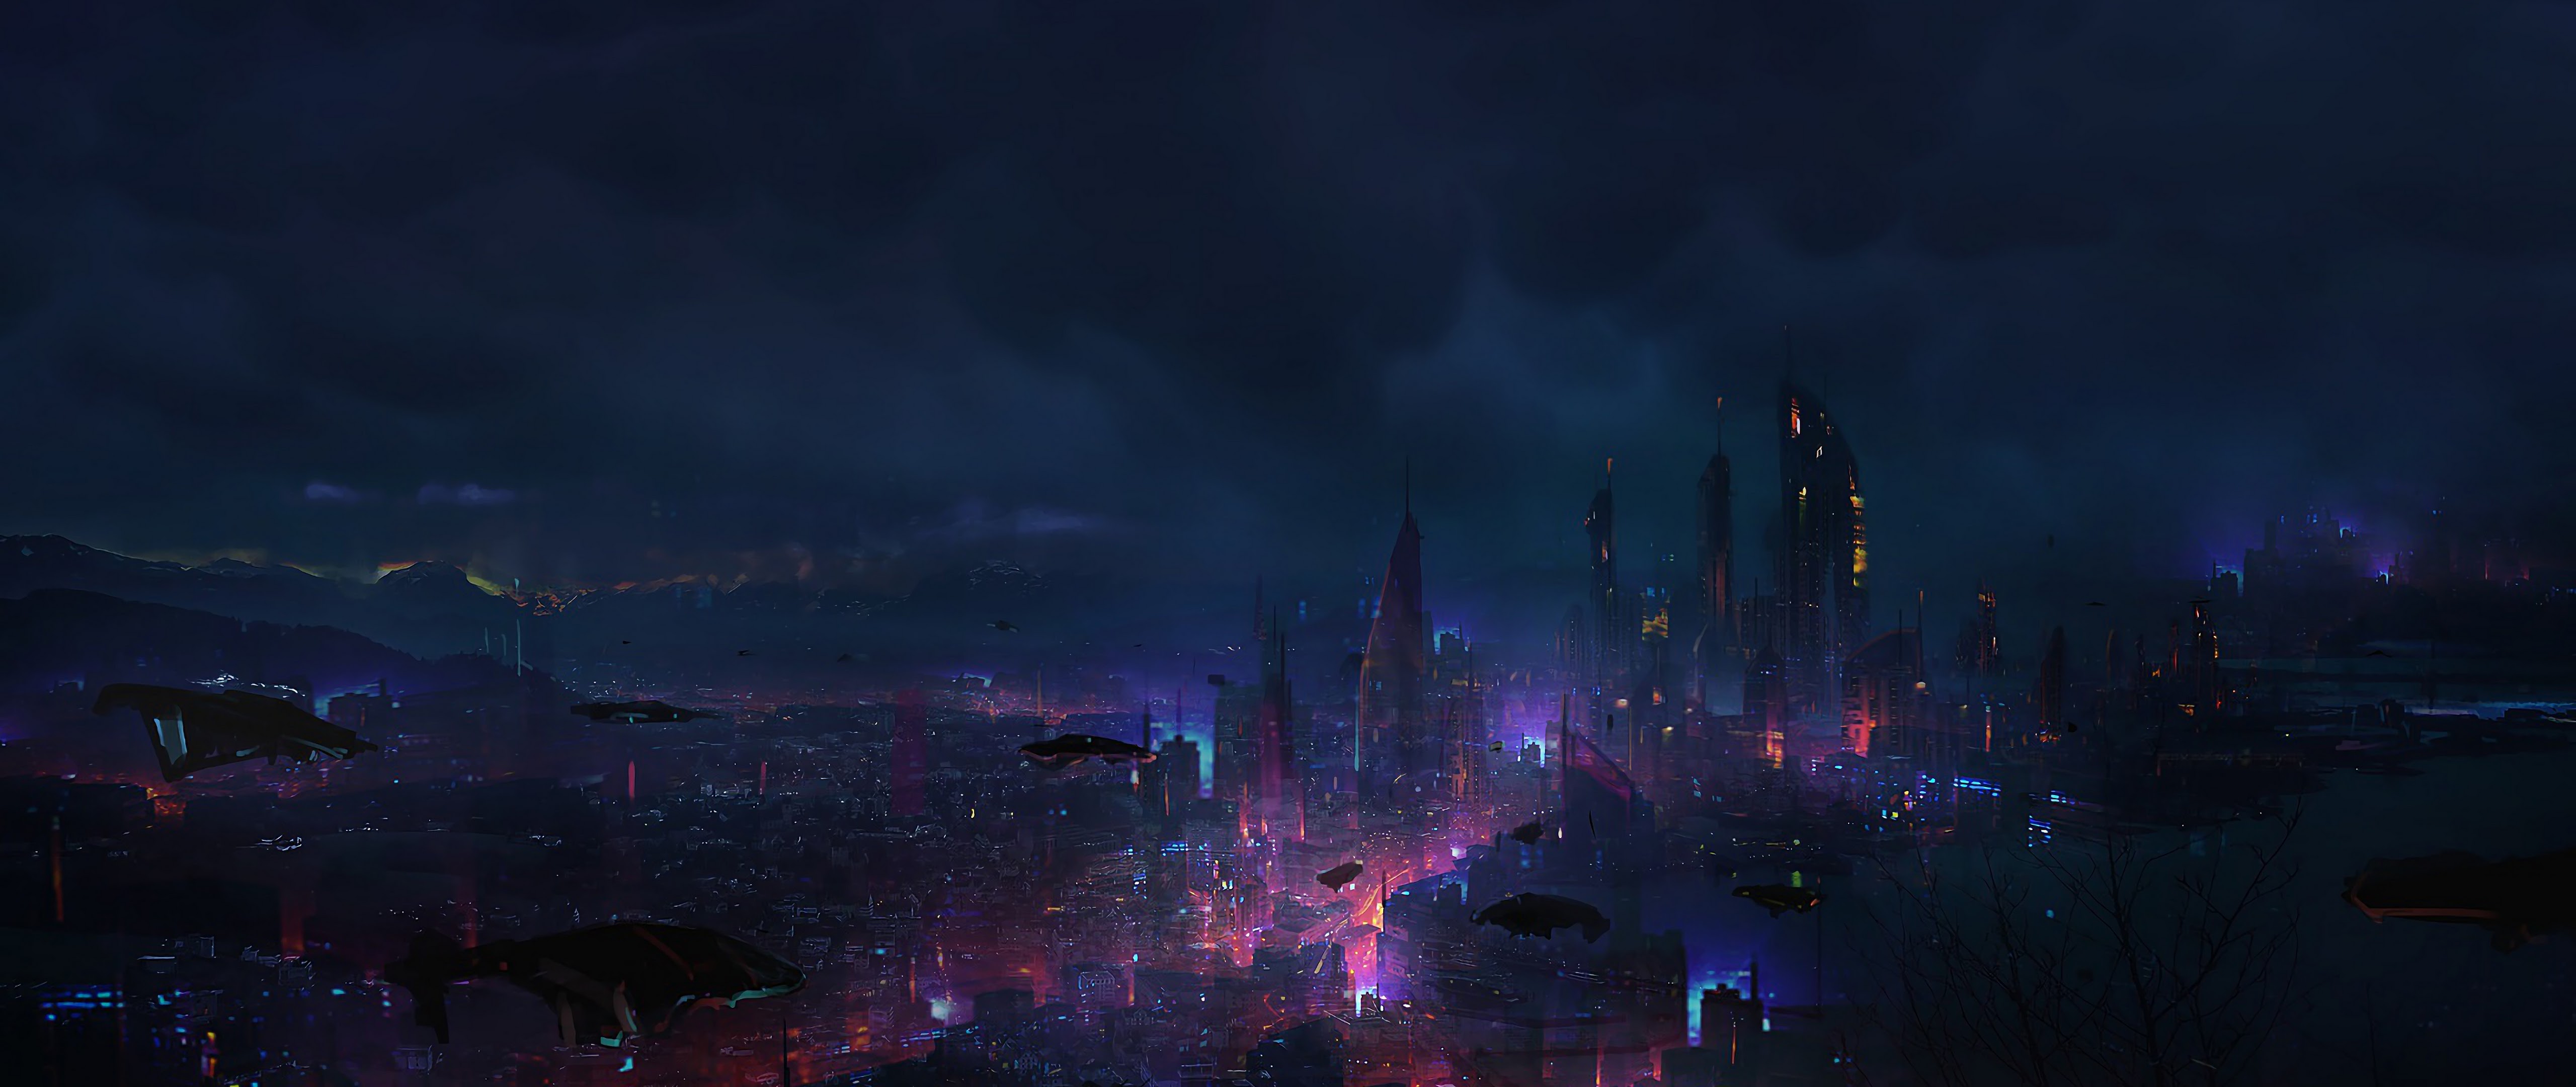 Cyberpunk City Night Scenery Sci Fi 4k Wallpaper